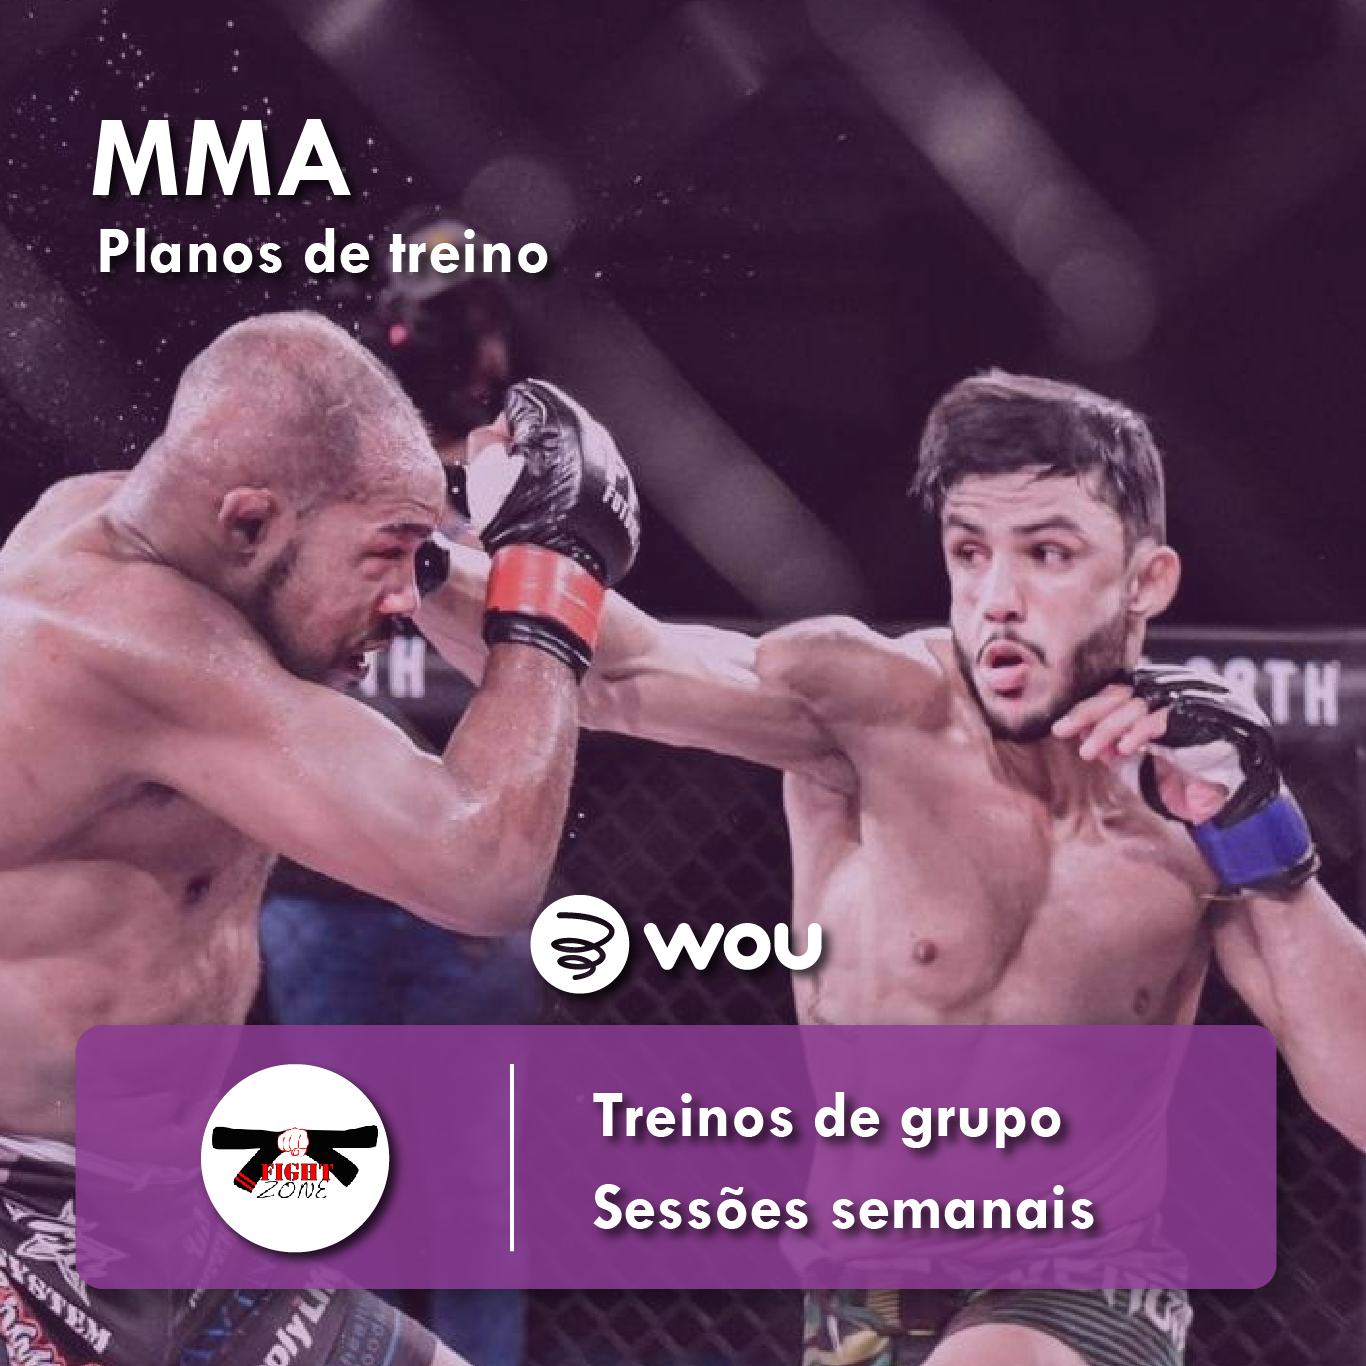 MMA Classes in Aveiro